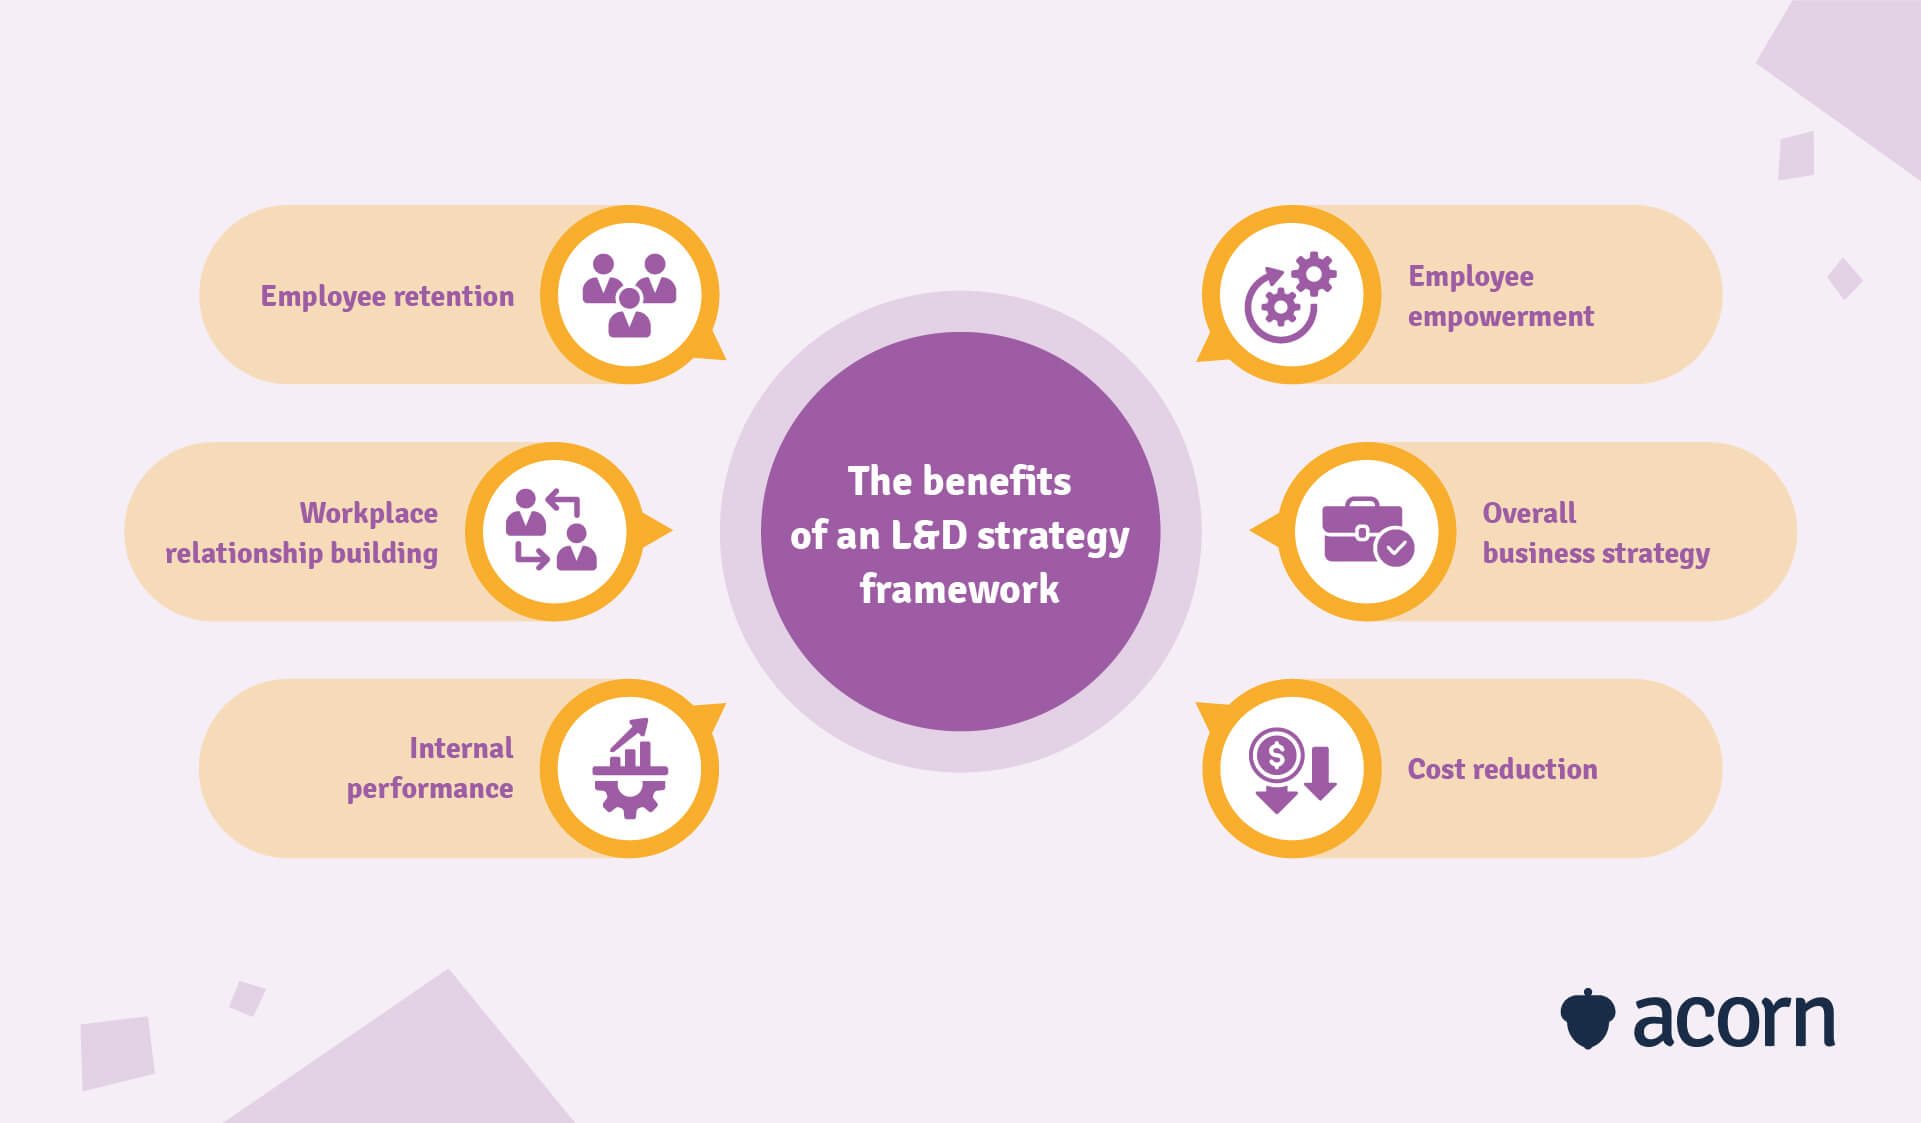 The benefits of an L&D strategy framework